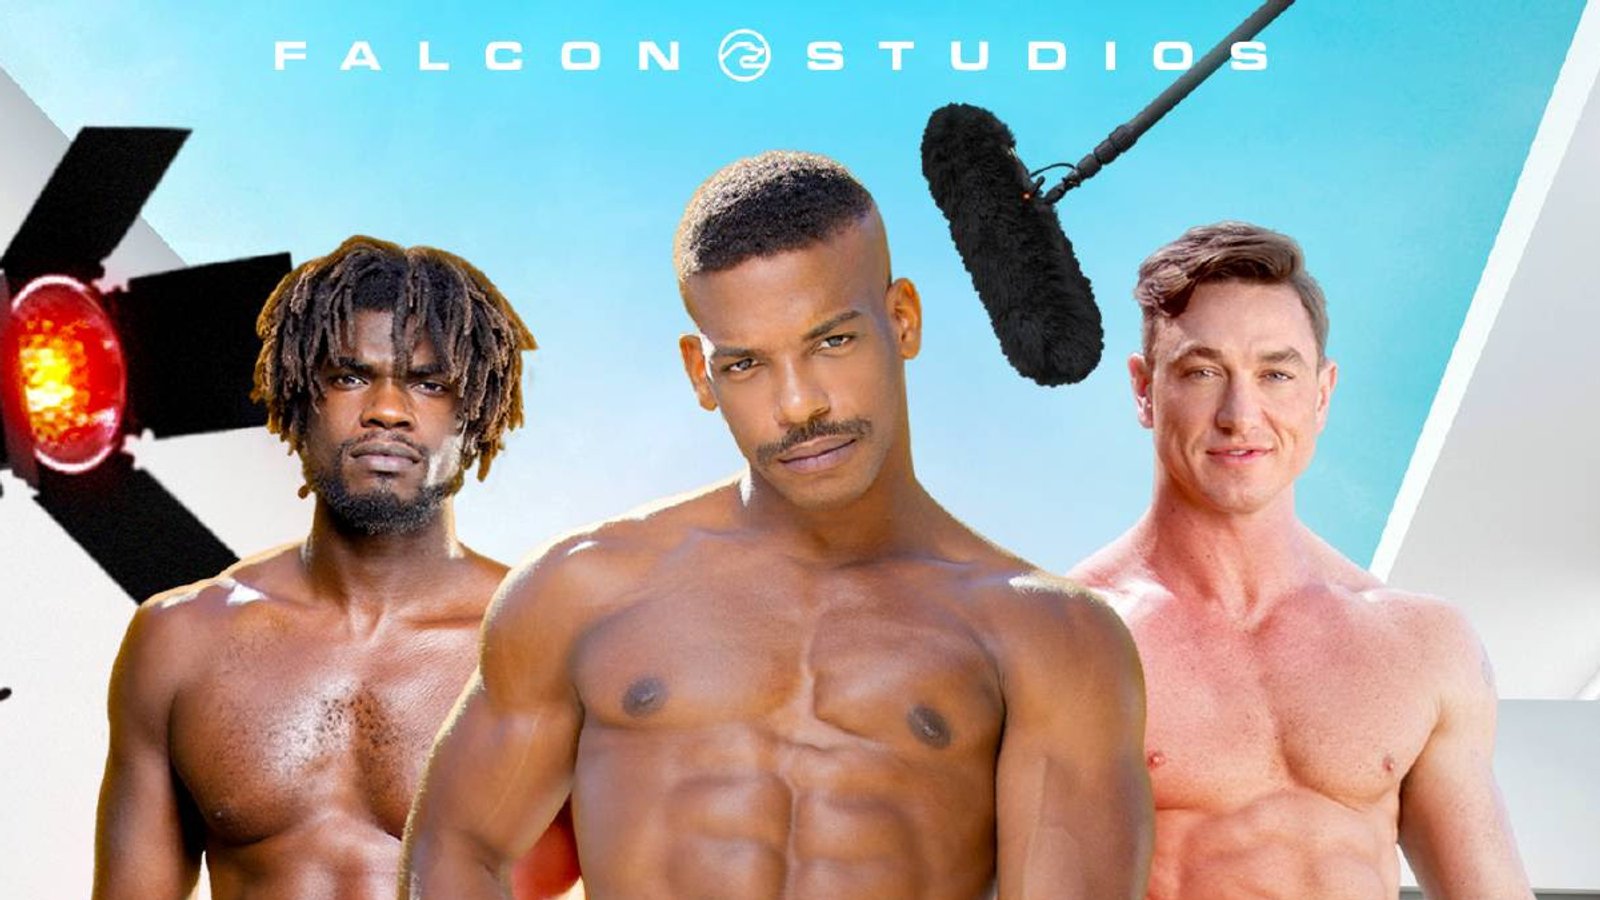 Falcon Studios Porn. 